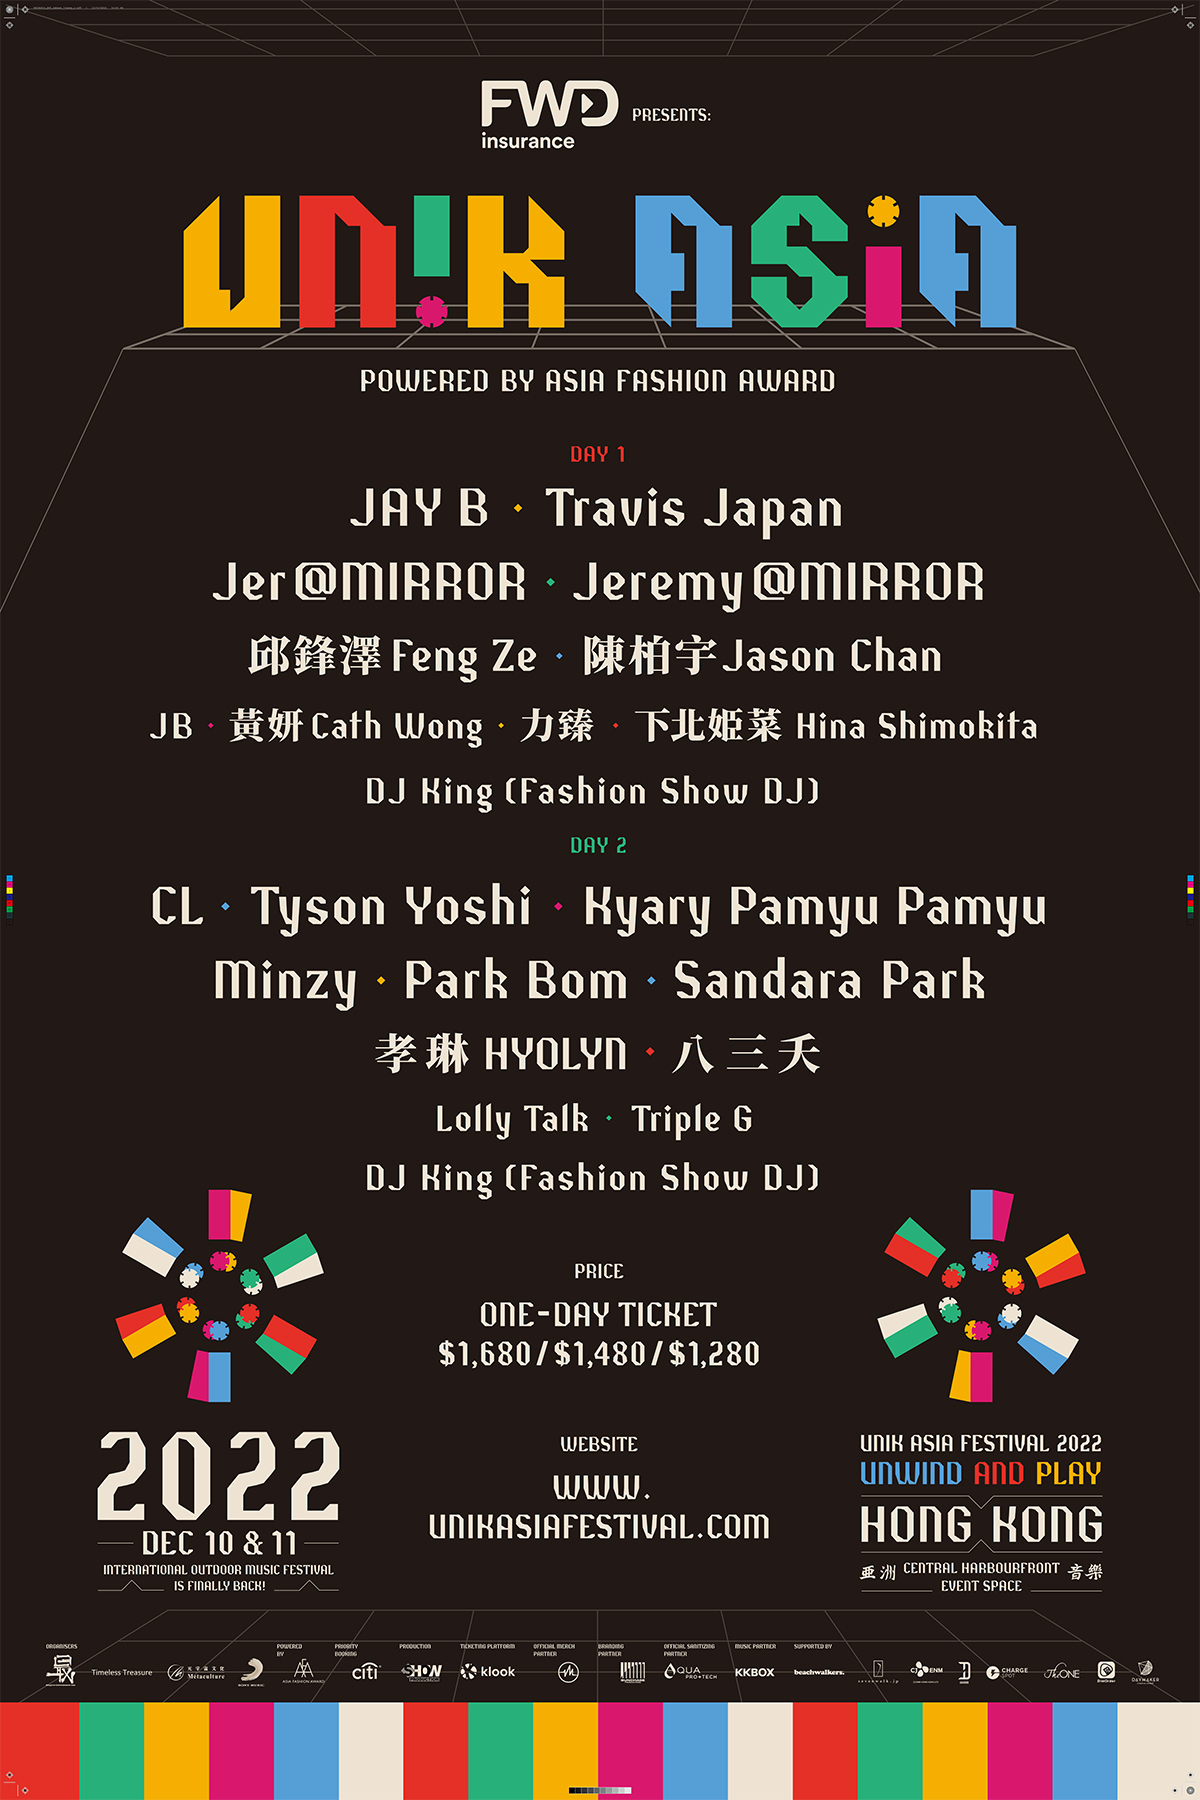 『UNIK ASIA FESTIVAL 2022』